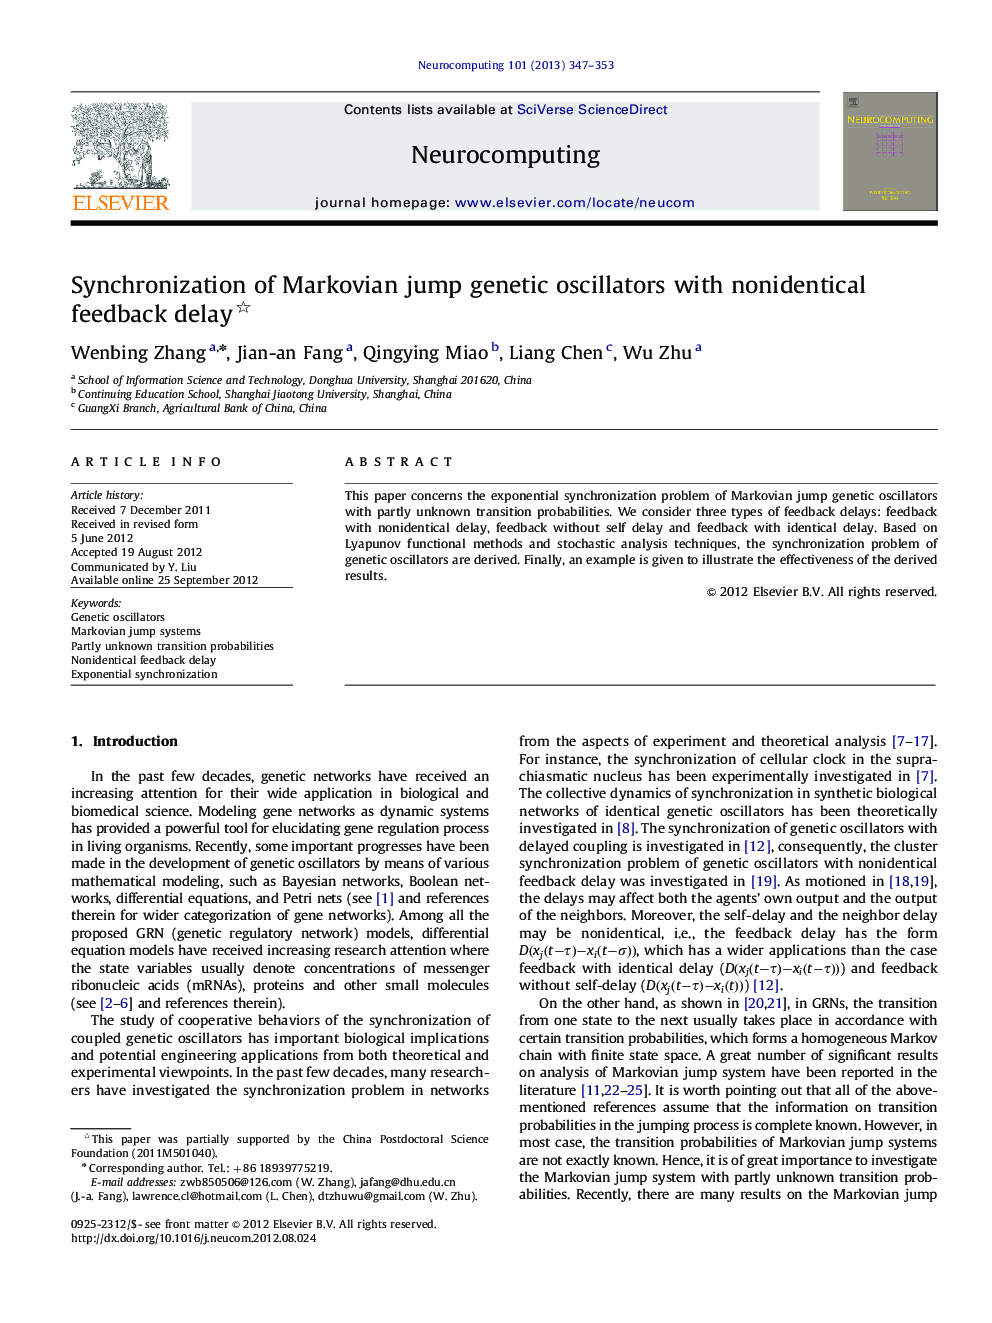 Synchronization of Markovian jump genetic oscillators with nonidentical feedback delay 